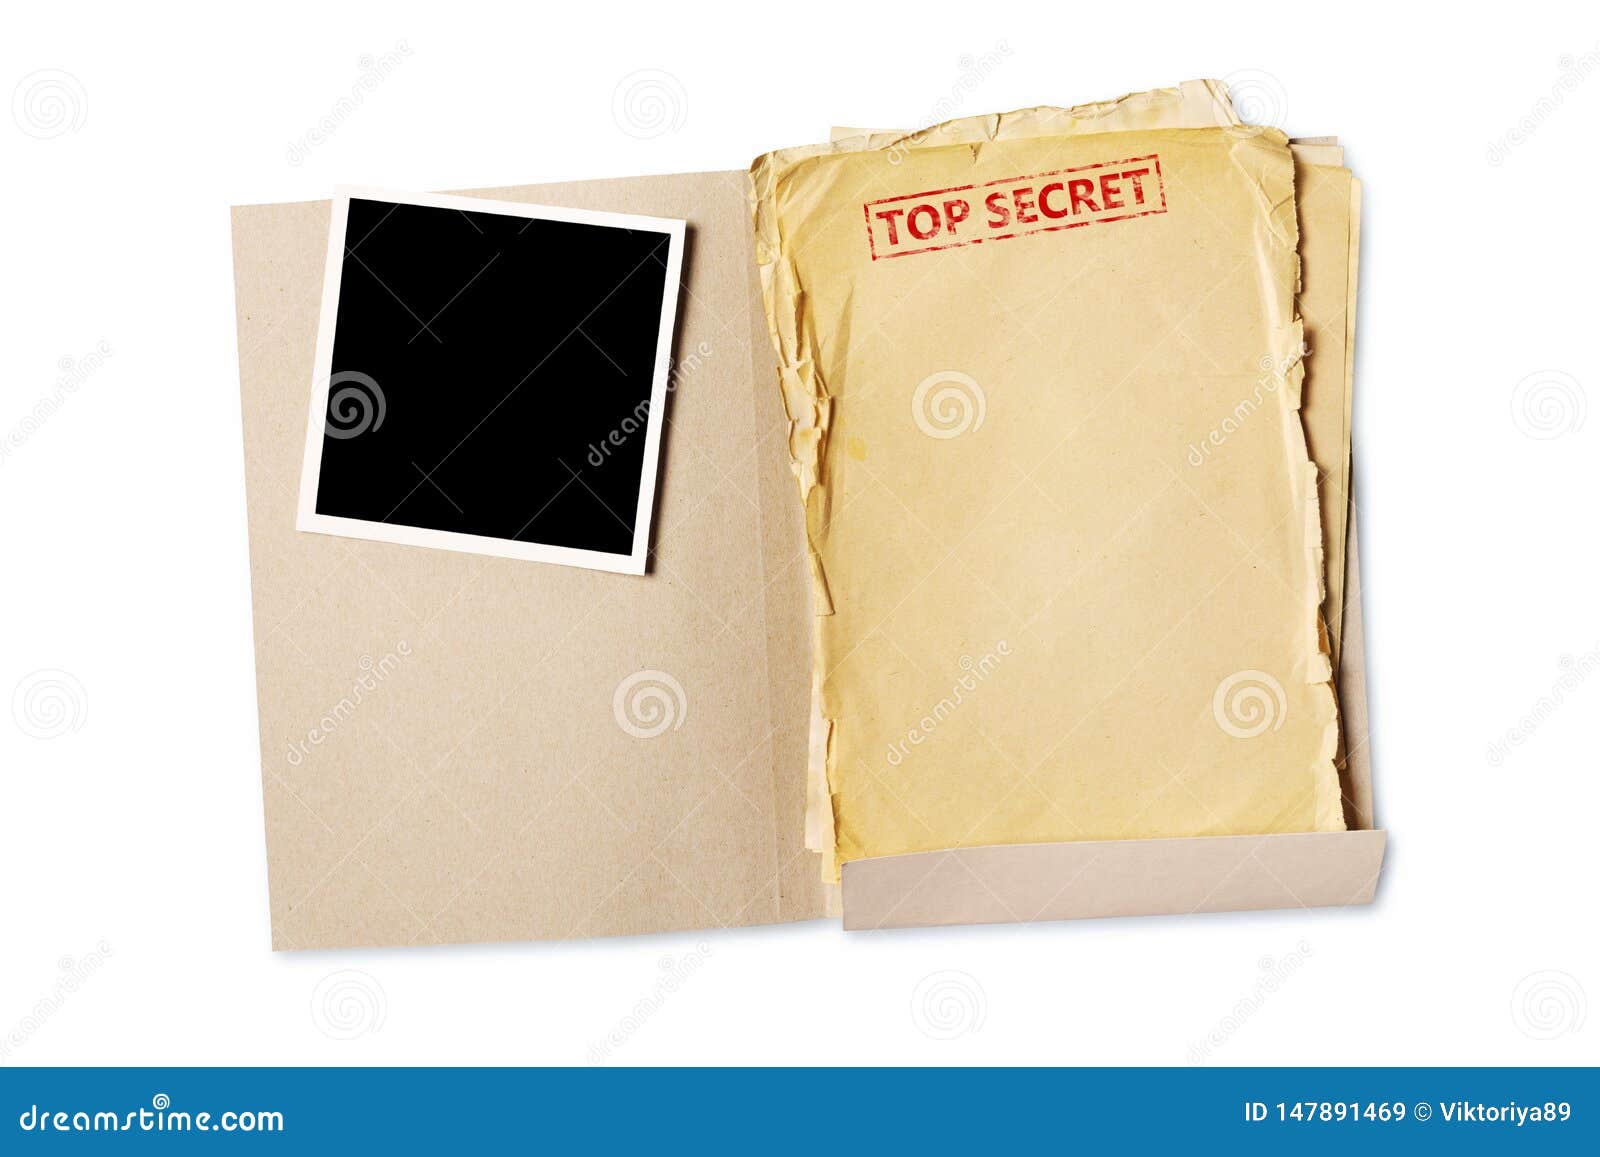 Download Top Secret File Mockup Design Free - Educlips Design: The ...